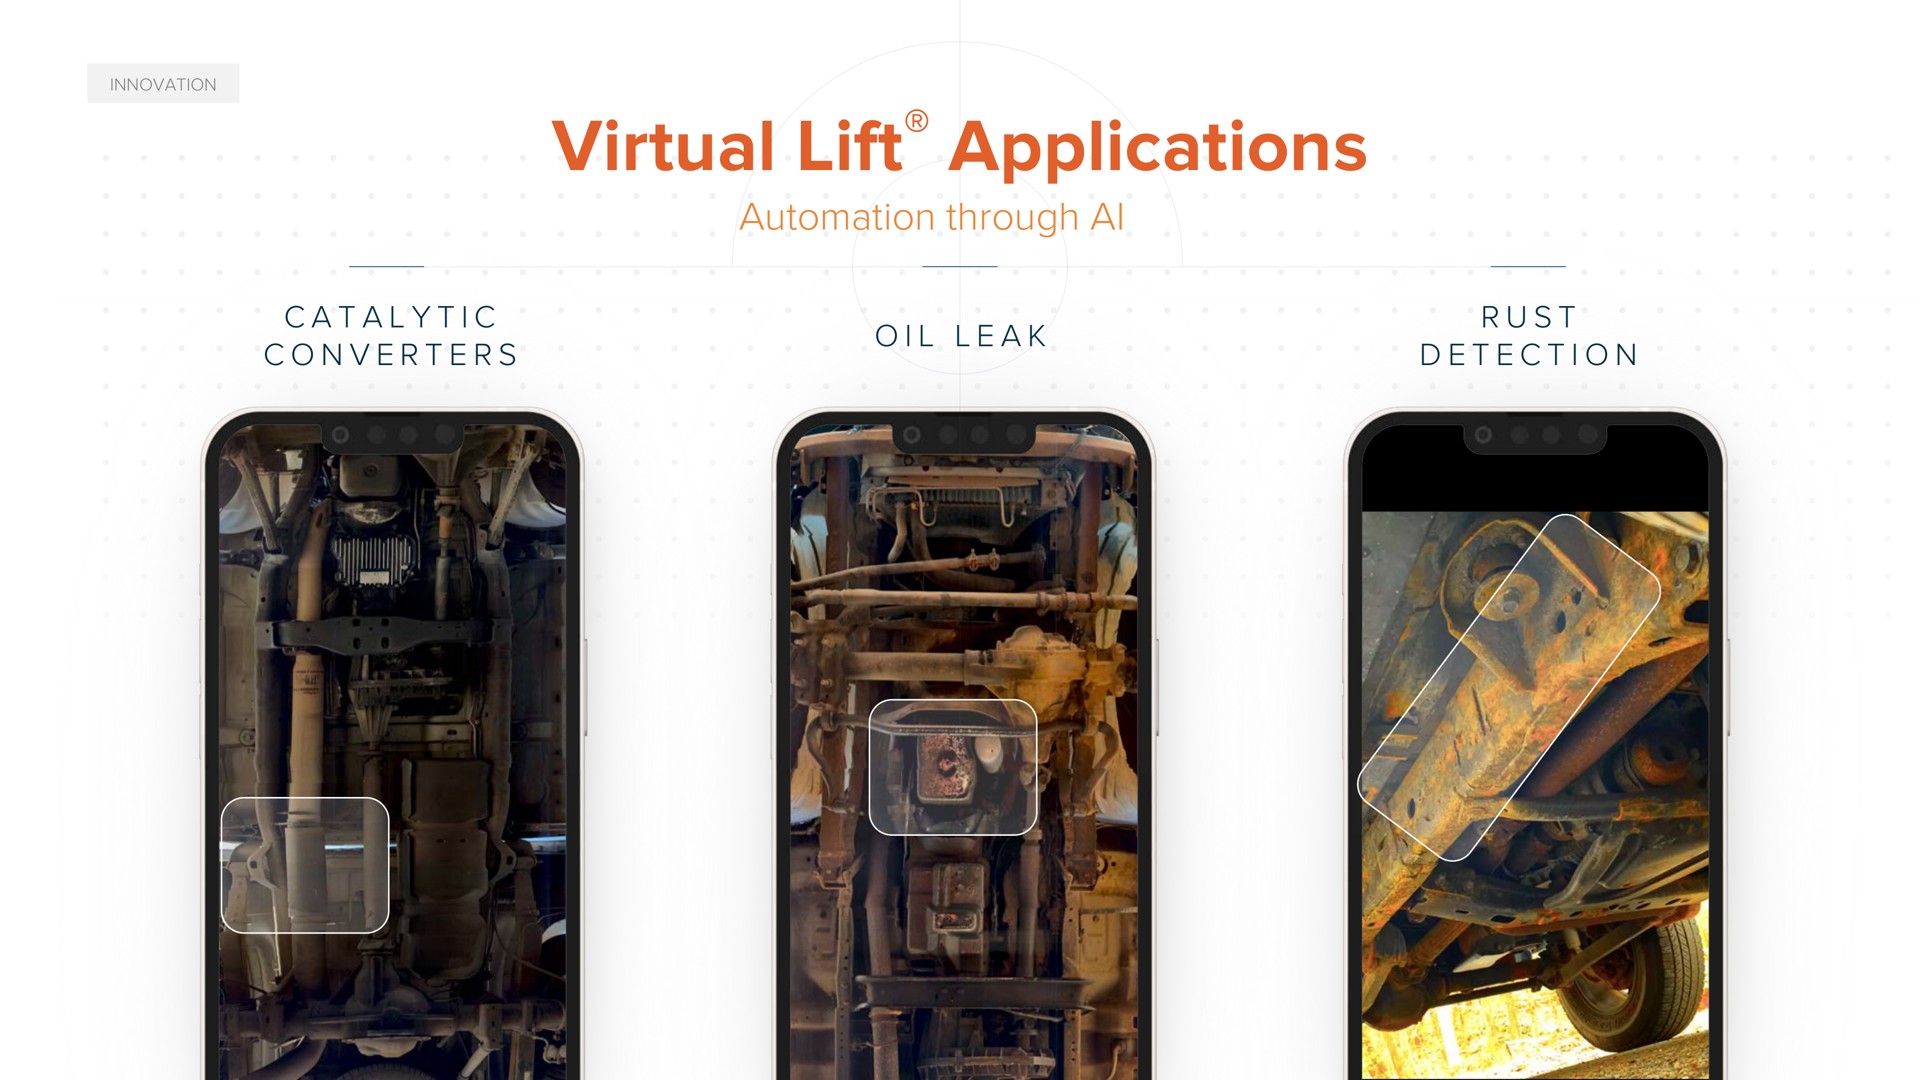 virtual lift applications through catalytic converters leak rust detection | ACV Auctions